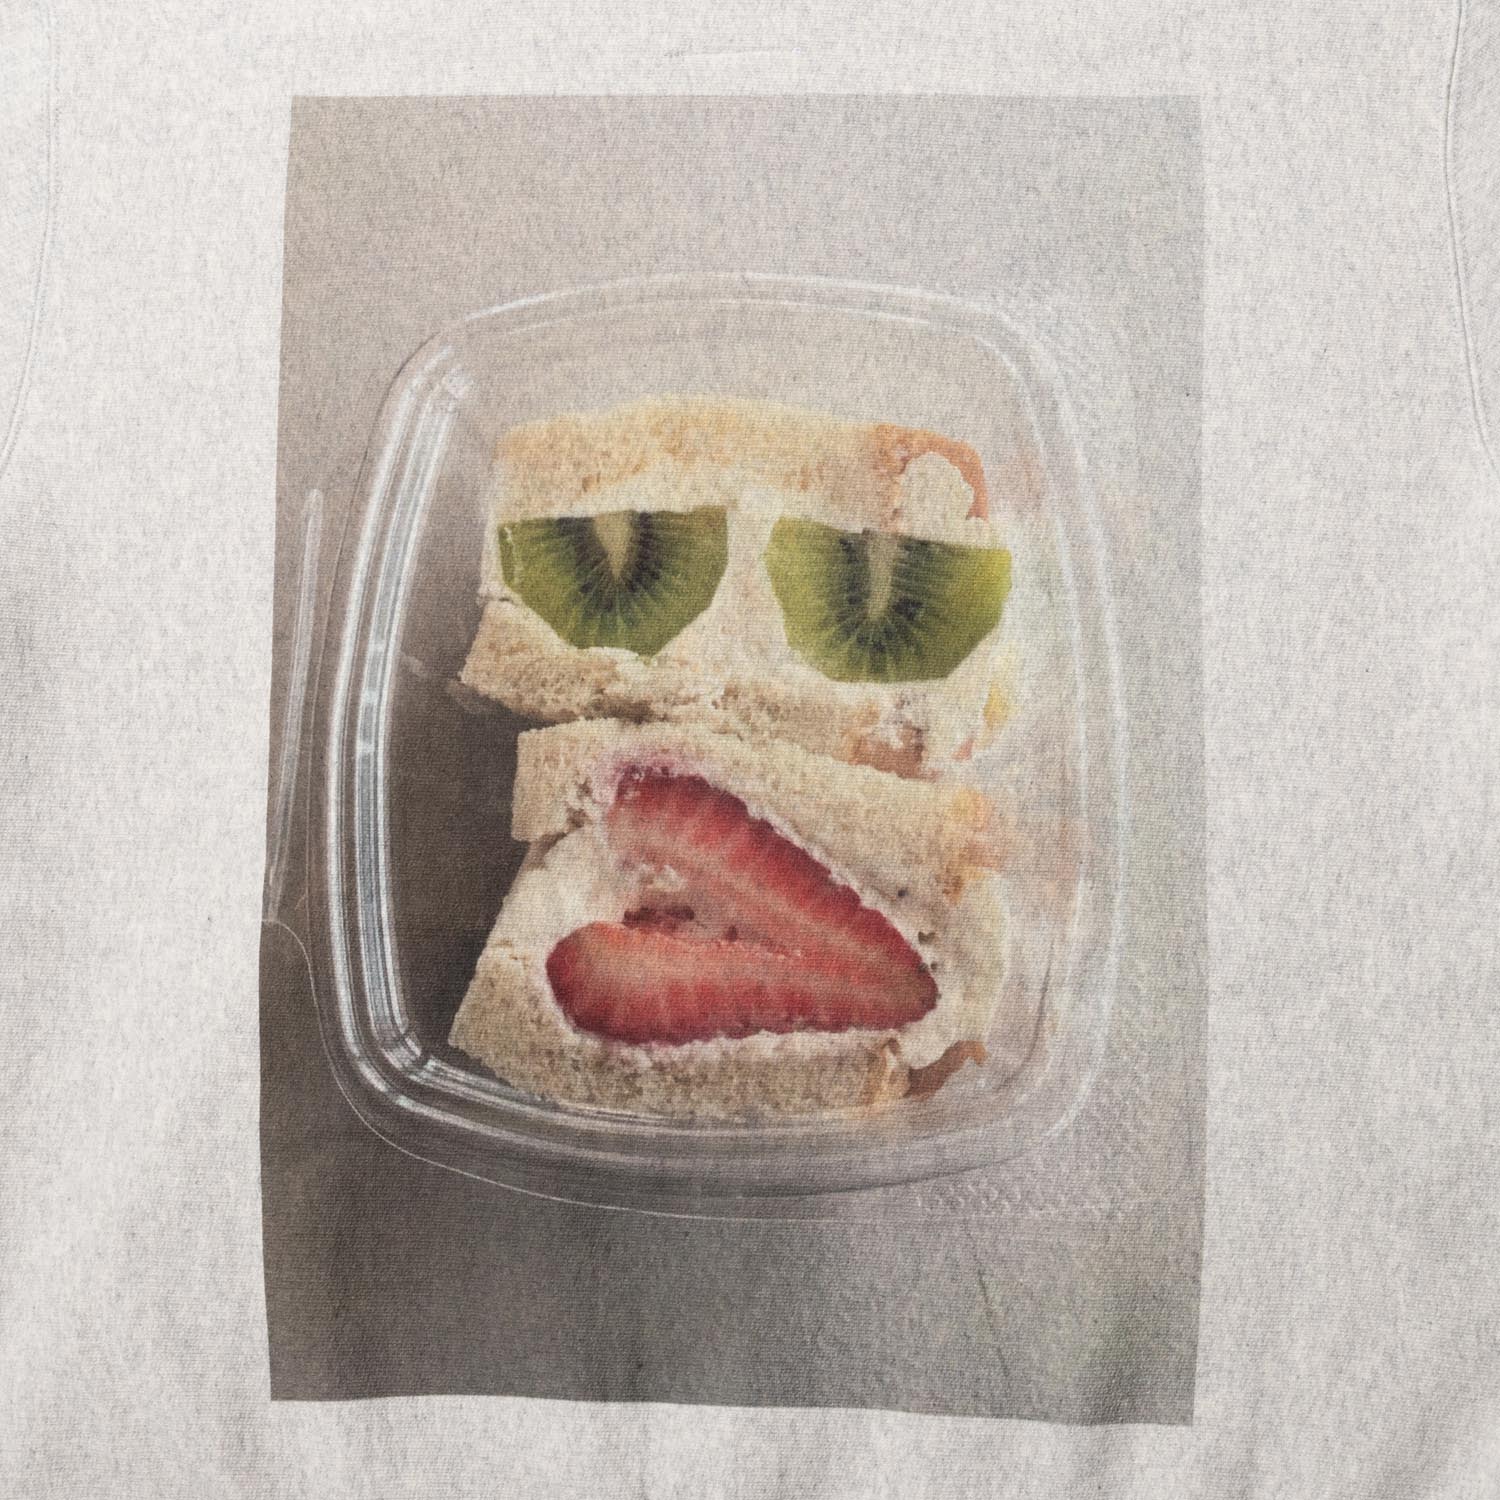 FRUIT SANDWICH HOODIE designed by Hirohisa Yokoyama